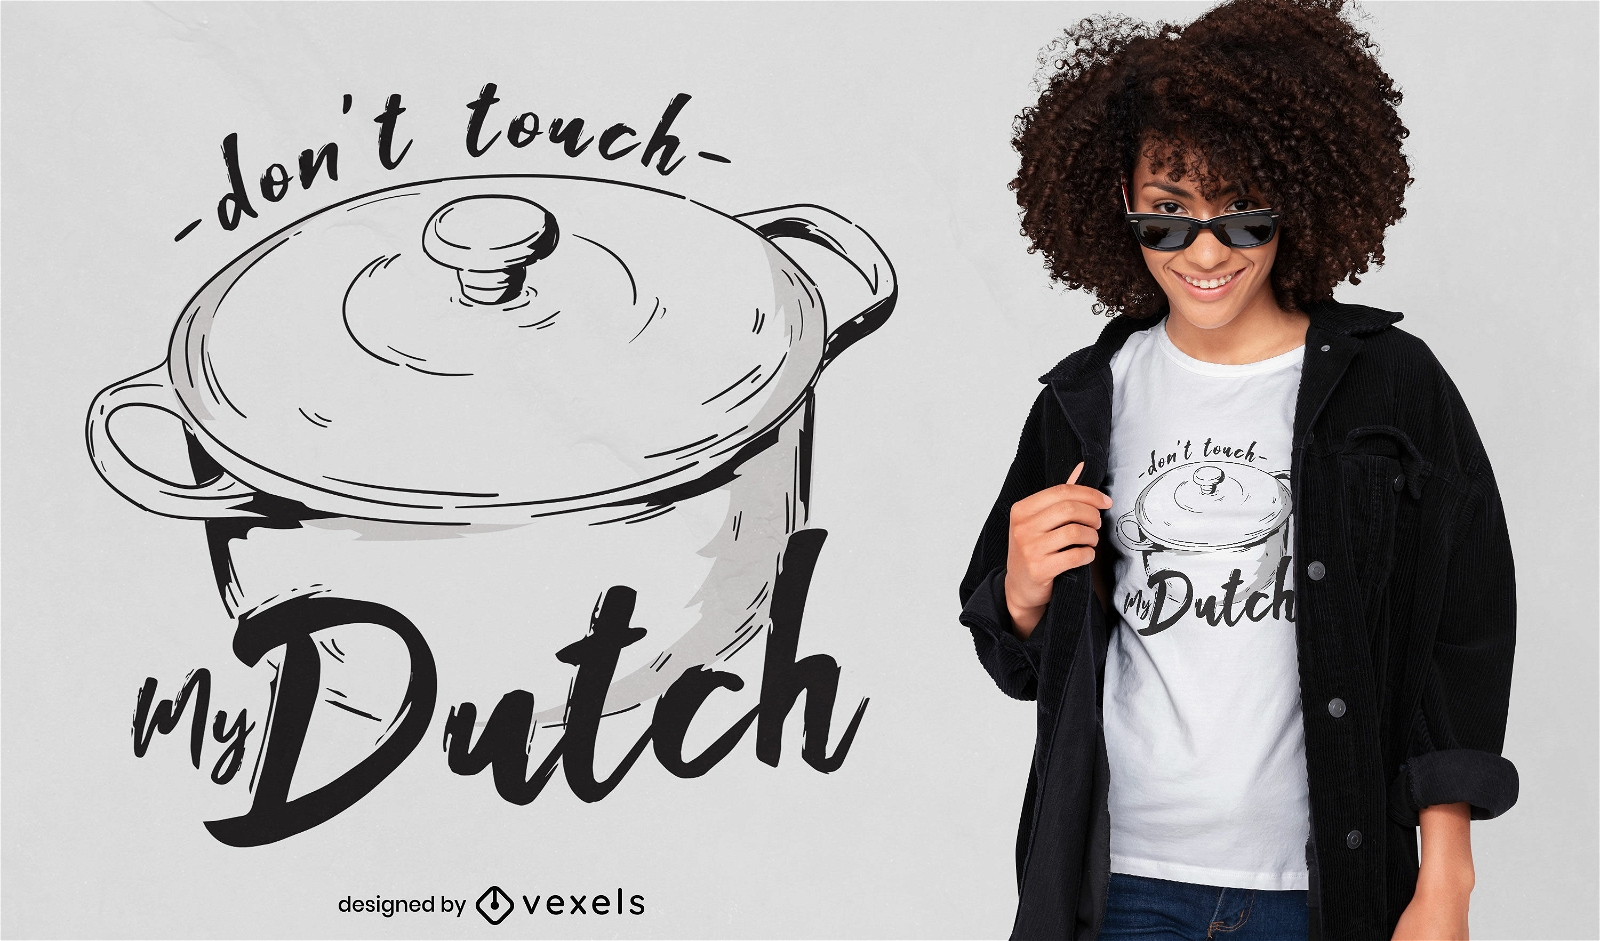 No toques el dise?o de mi camiseta holandesa.